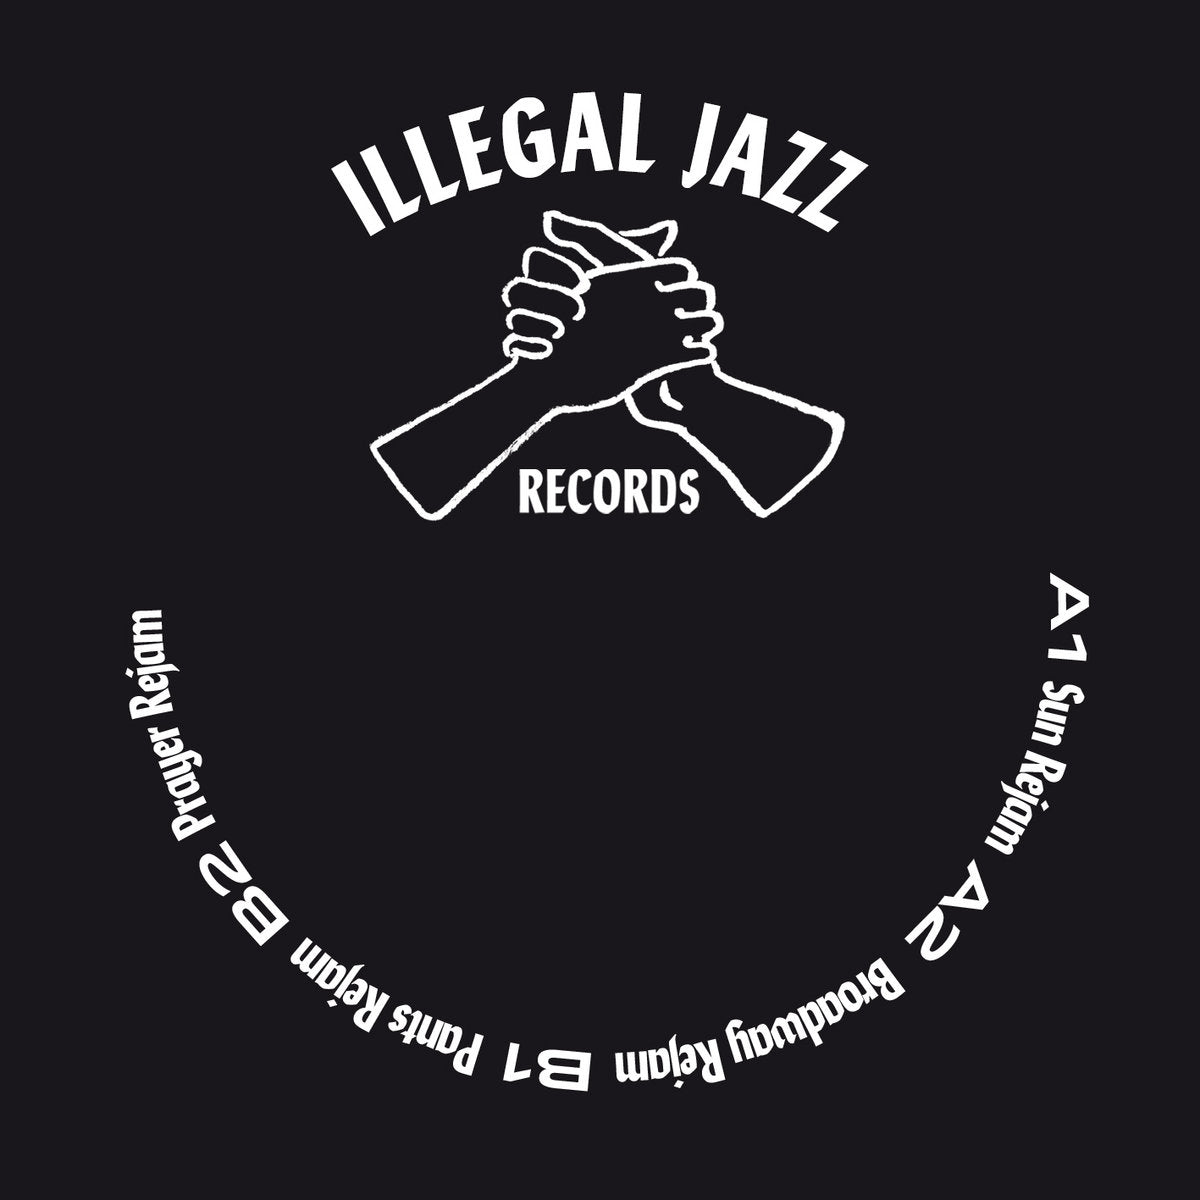 Delfonic & Kapote - Illegal Jazz Vol. 3 (12" Vinyl)